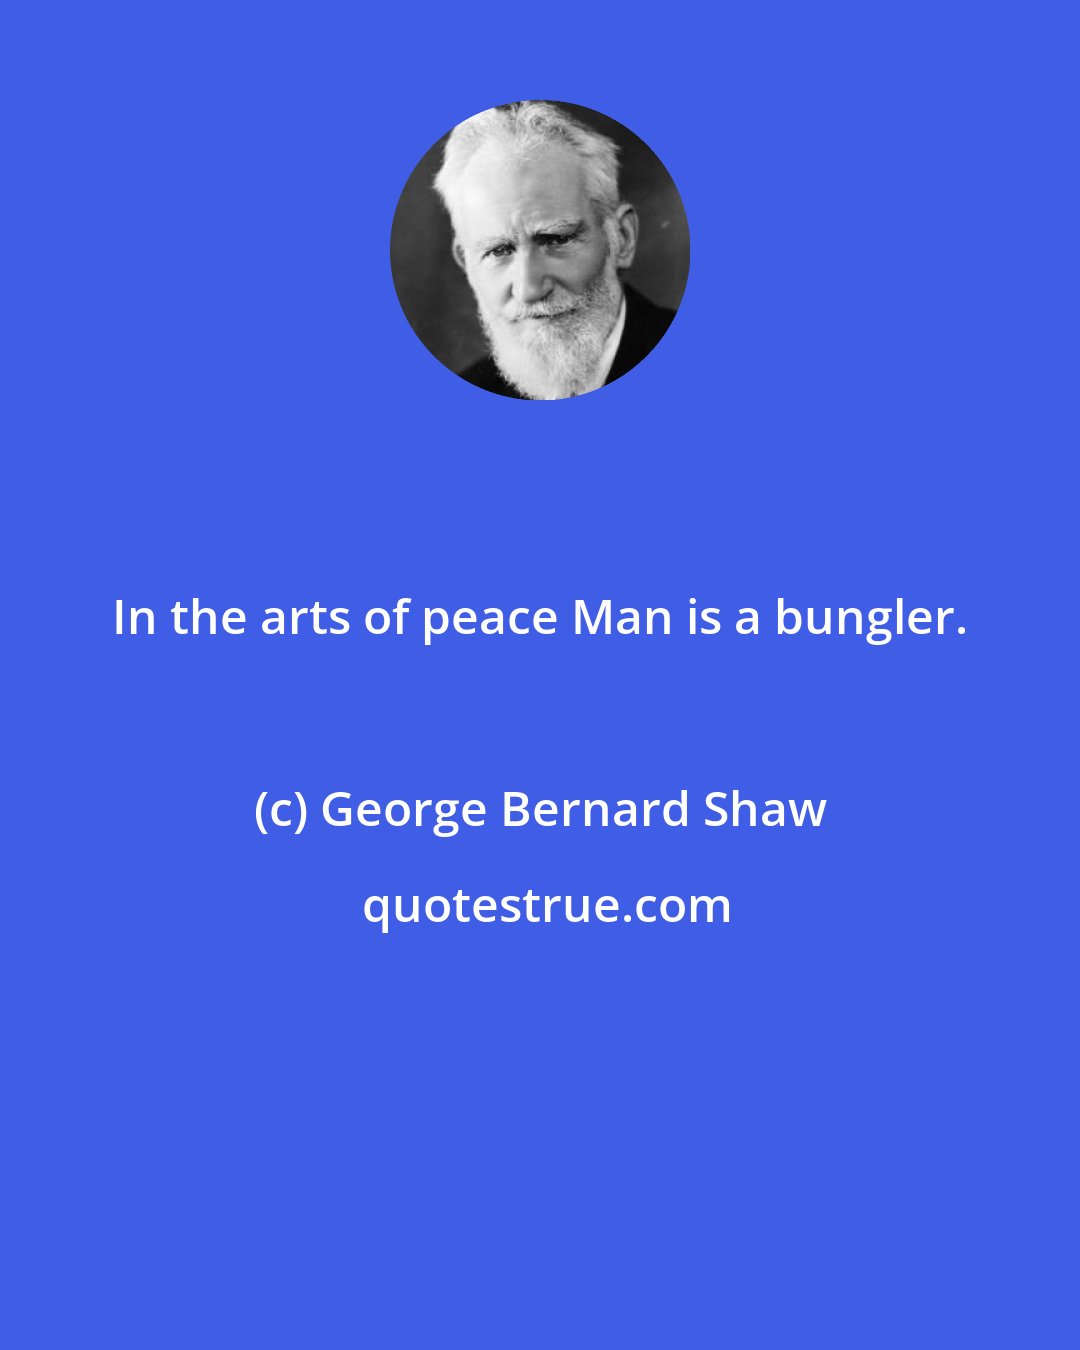 George Bernard Shaw: In the arts of peace Man is a bungler.